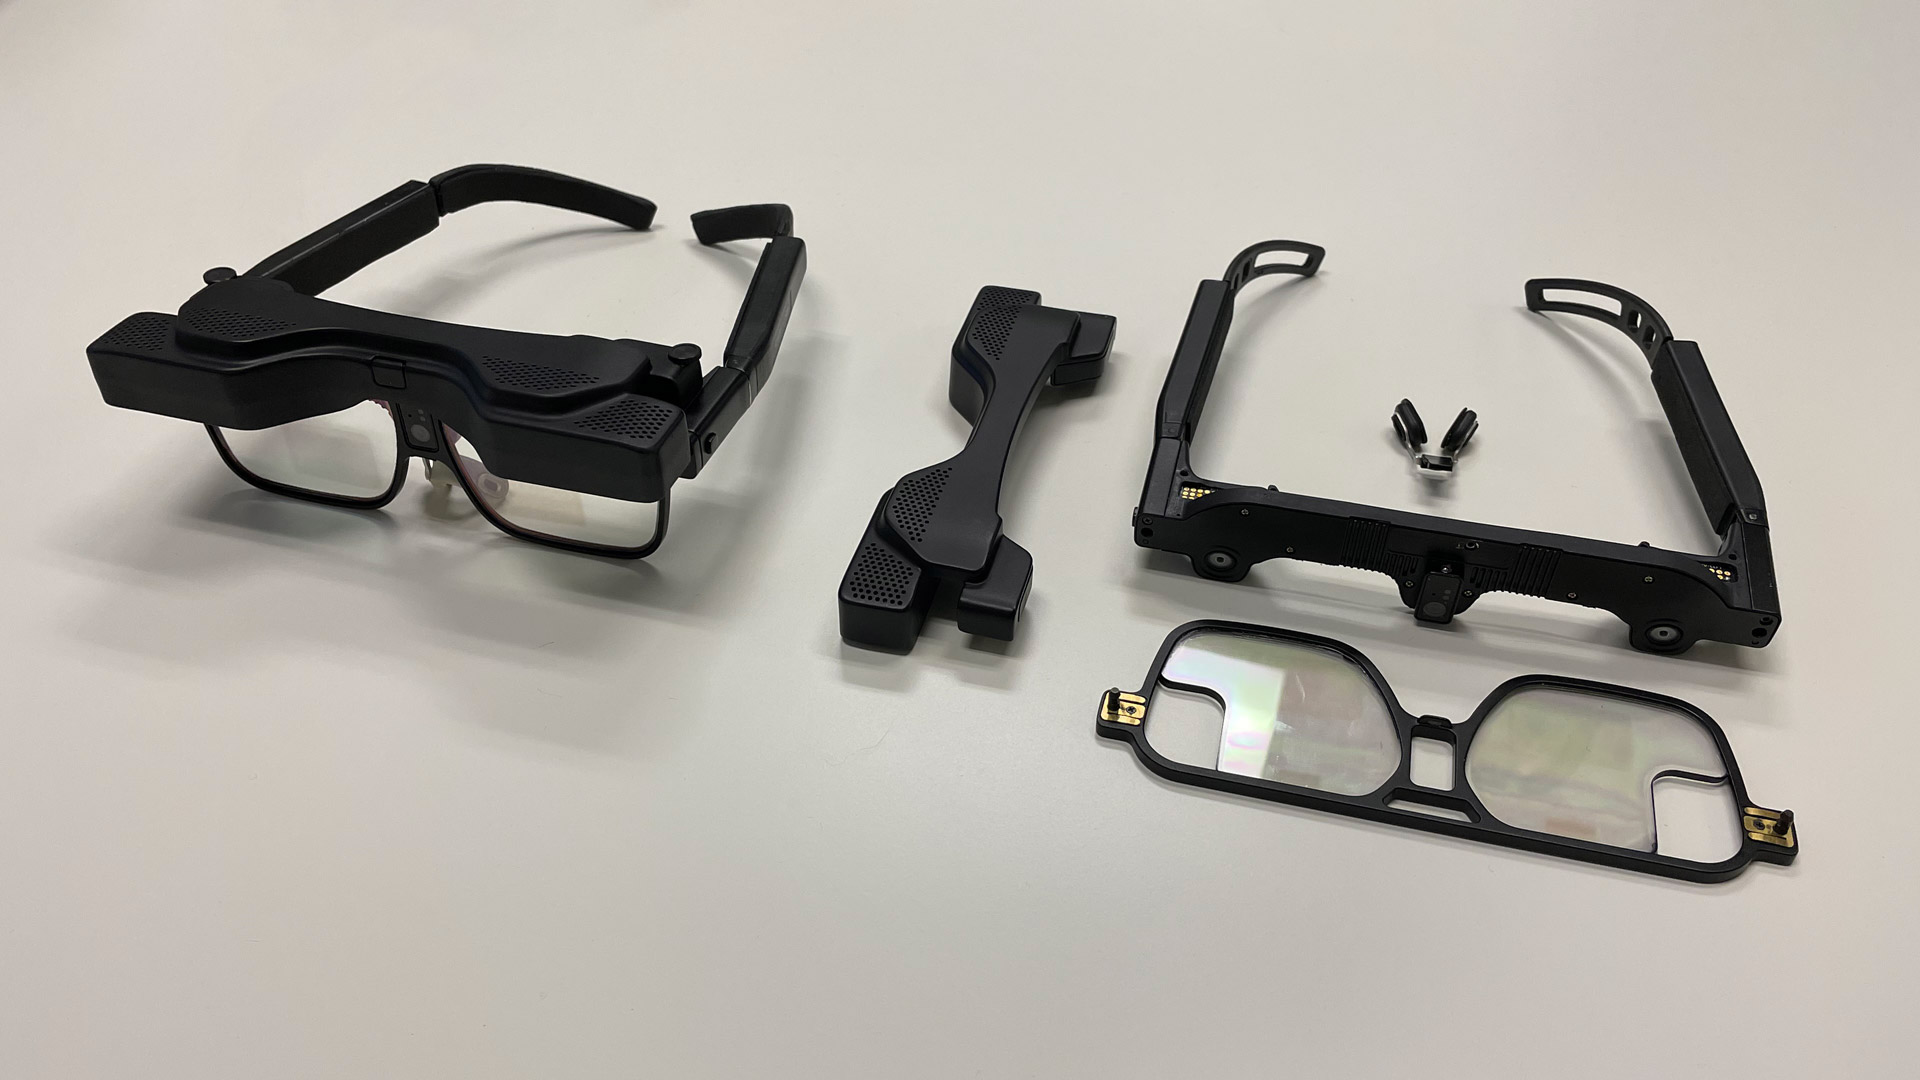 DigiLens is Building Modular AR Glasses to Accelerate Consumerization